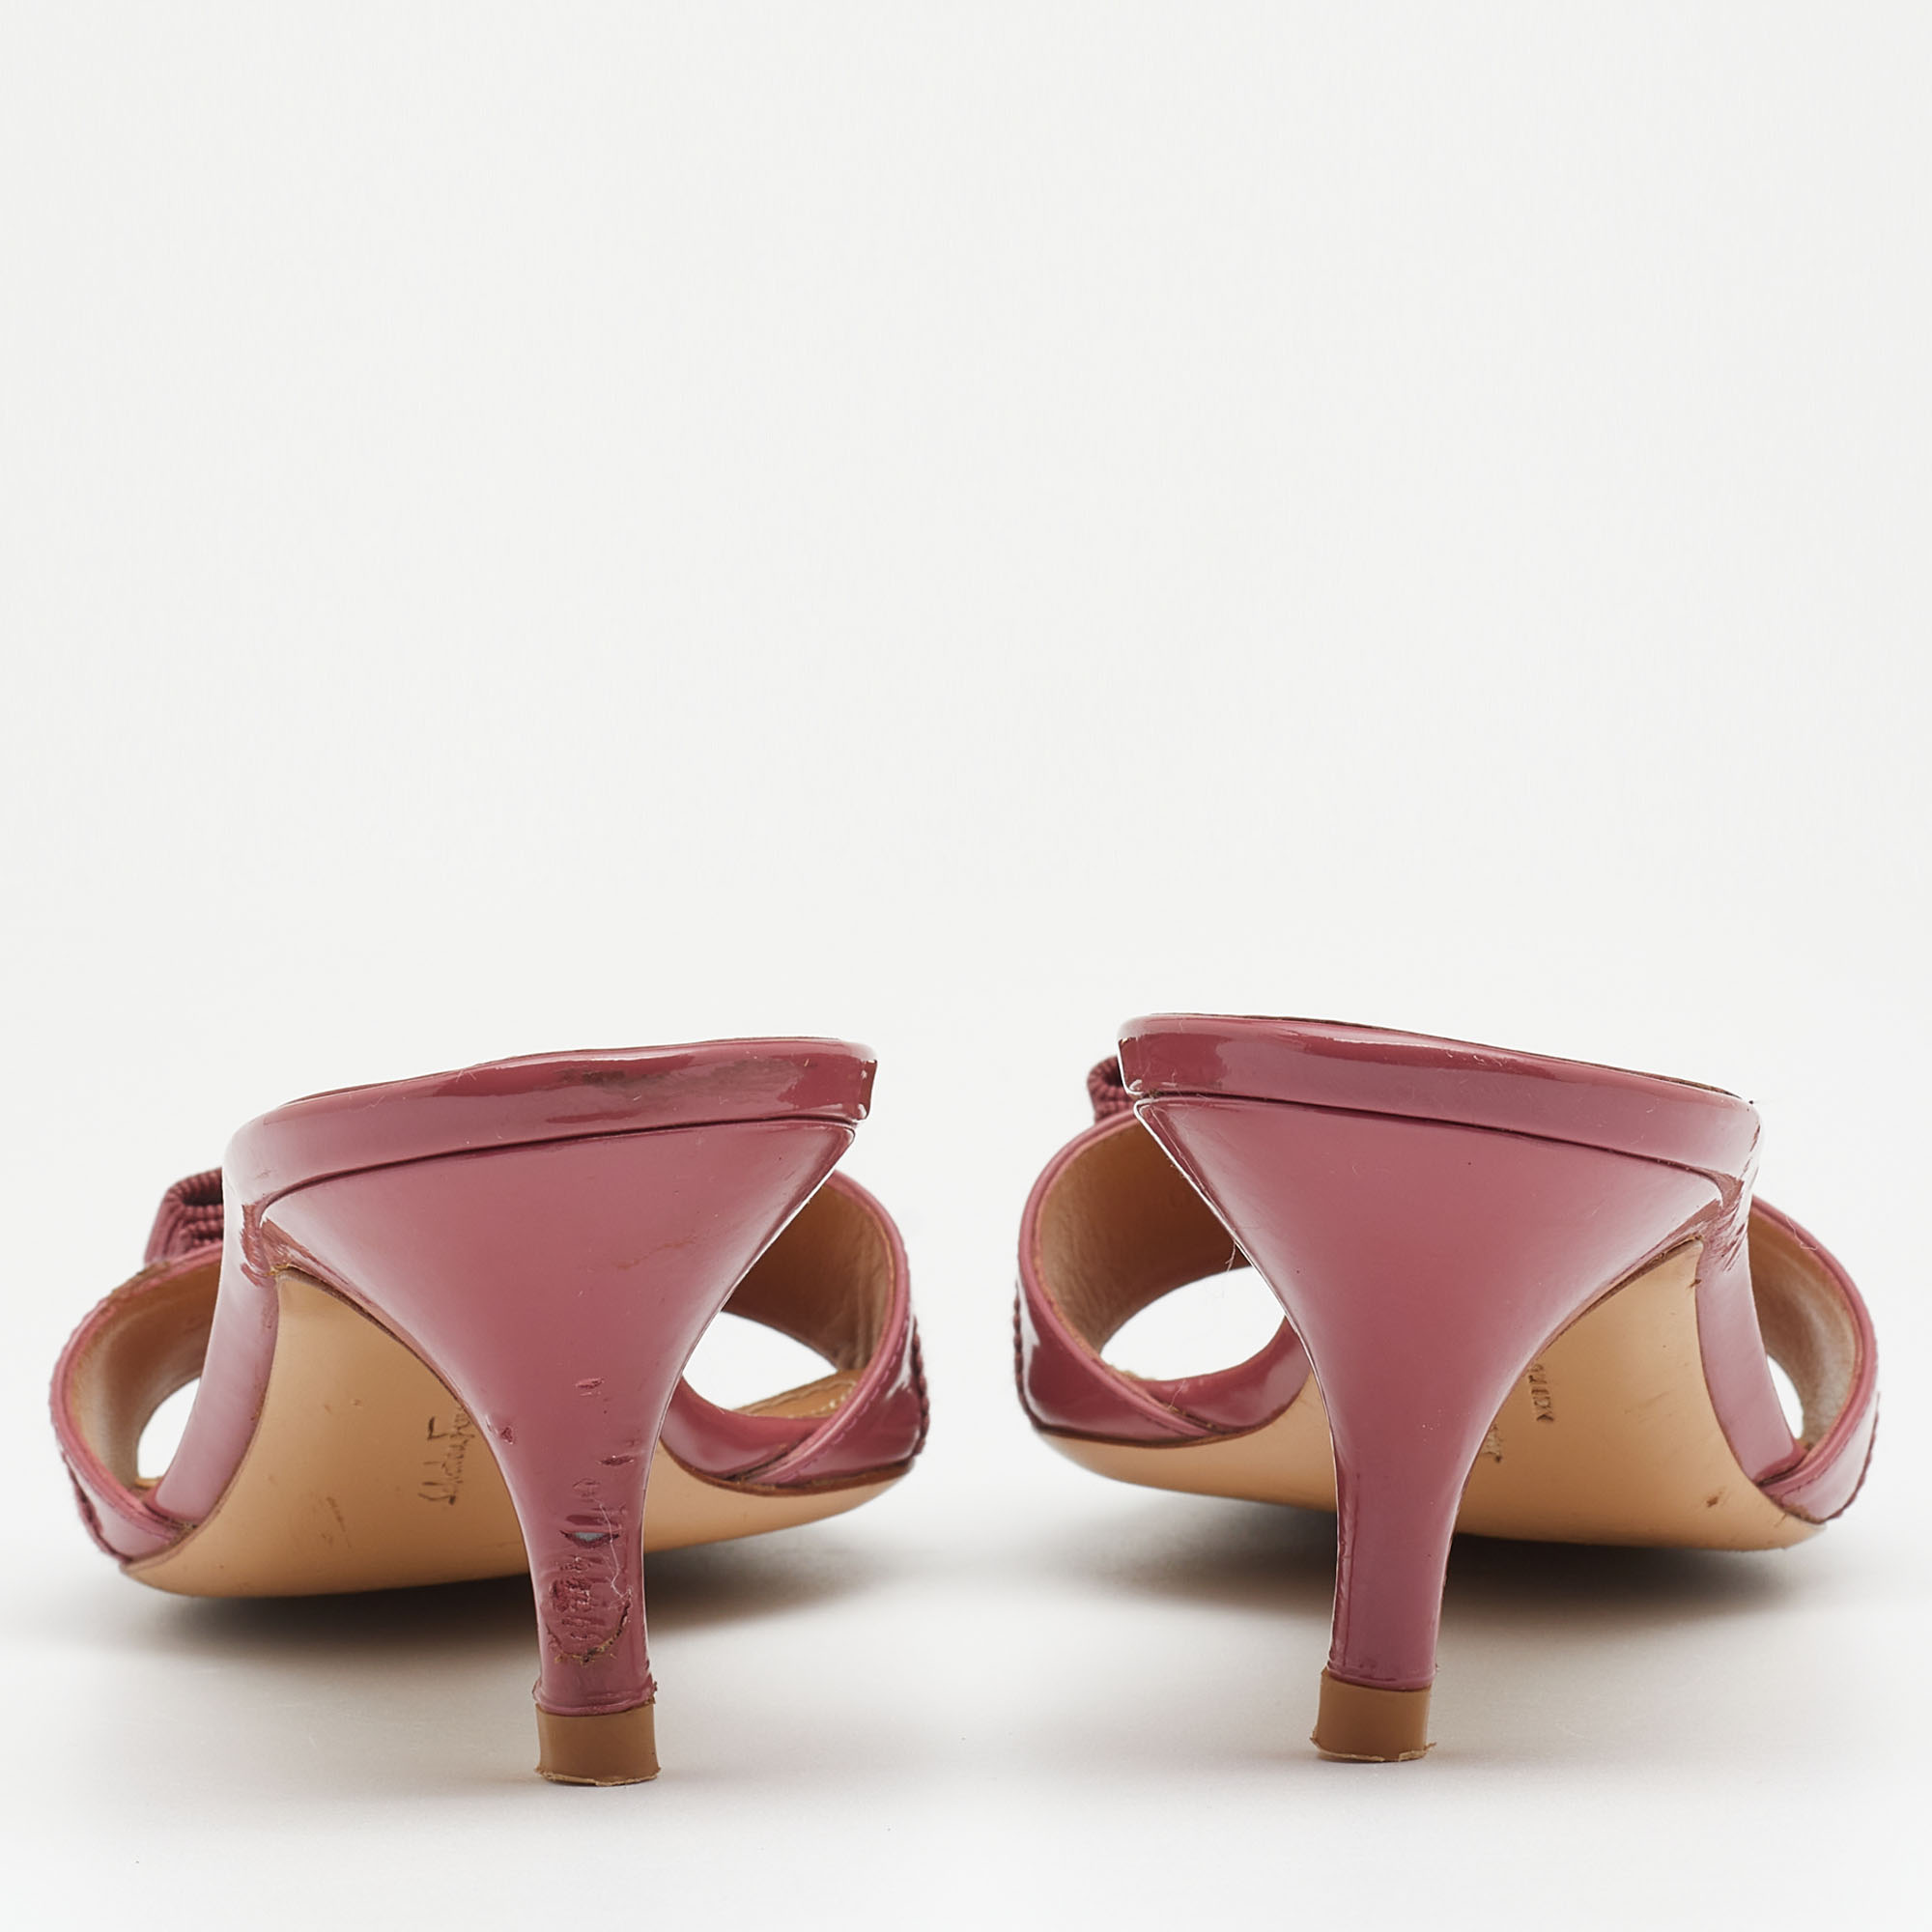 Salvatore Ferragamo Pink Patent Glory Bow Sandals Size 37.5